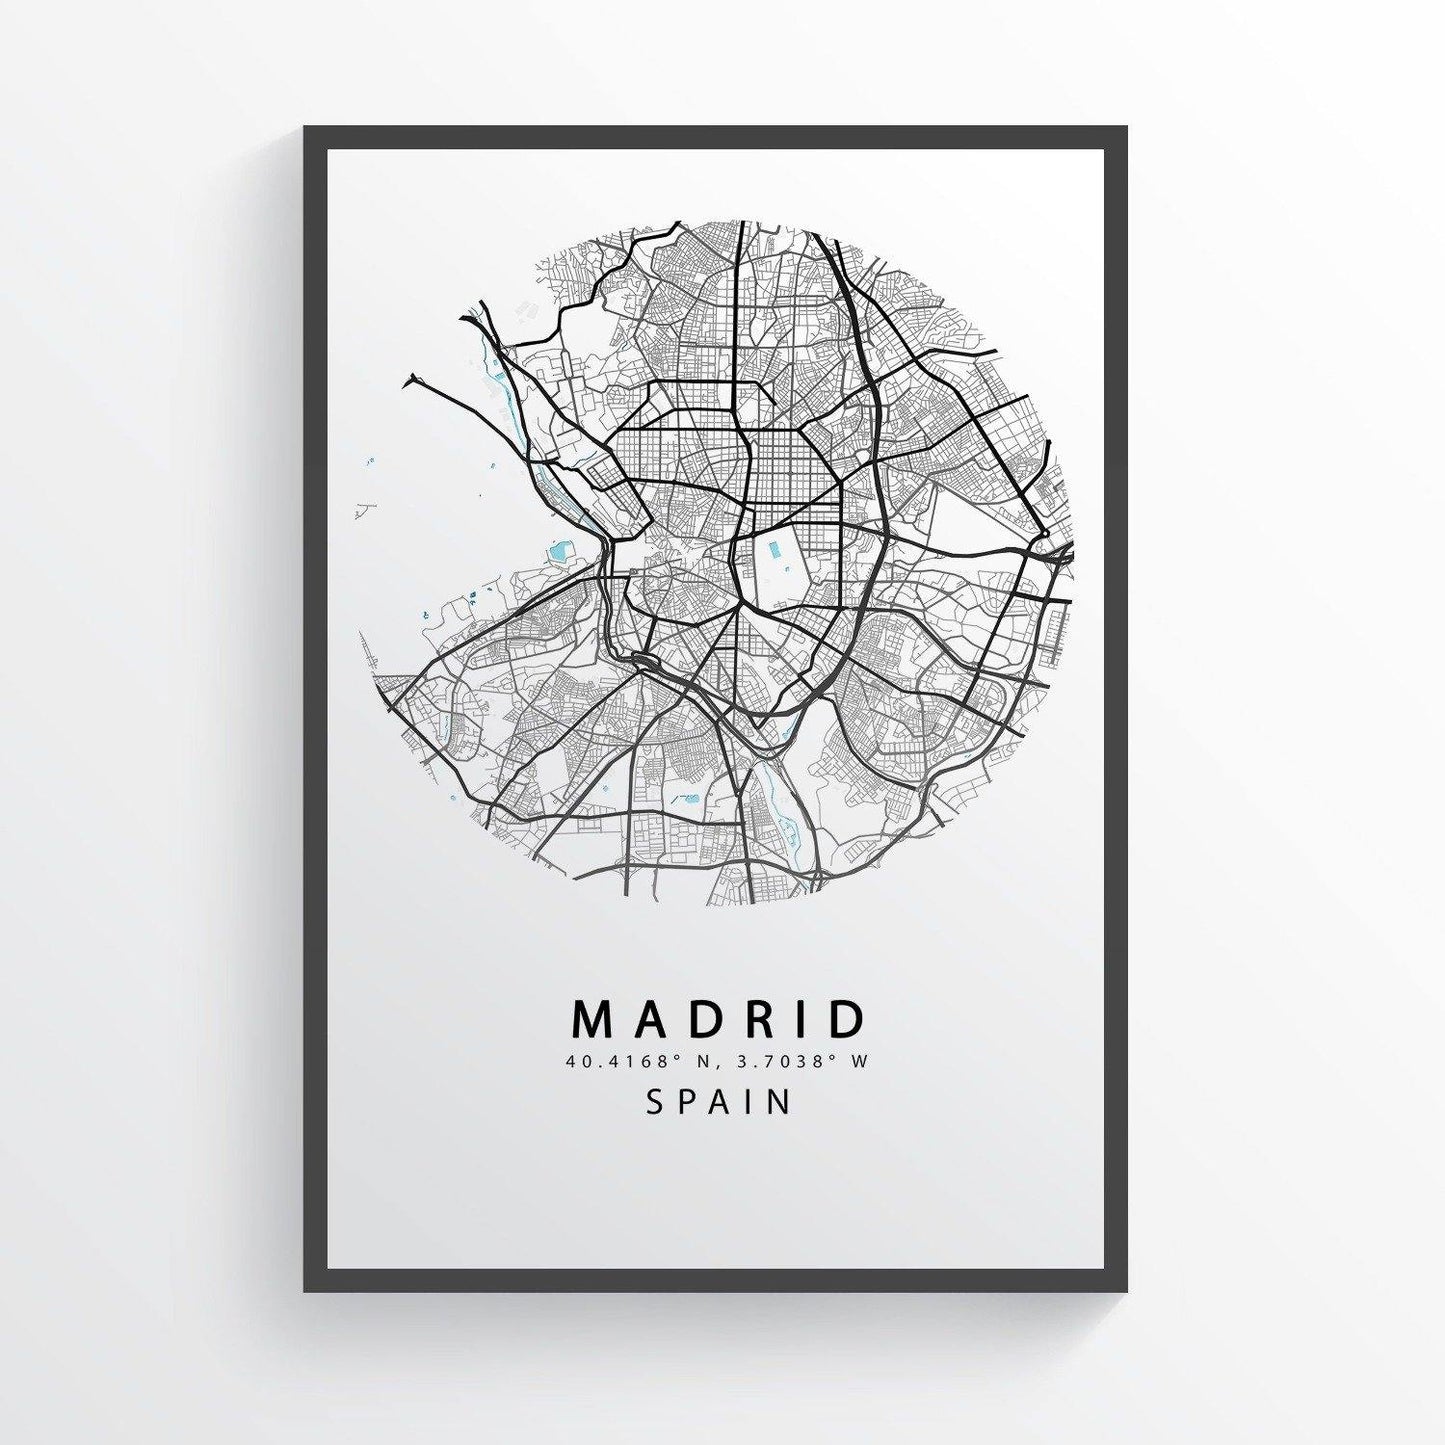  mapiful uk, map prints, maps art, custom map, custom map poster, map poster maker, map picture, map poster